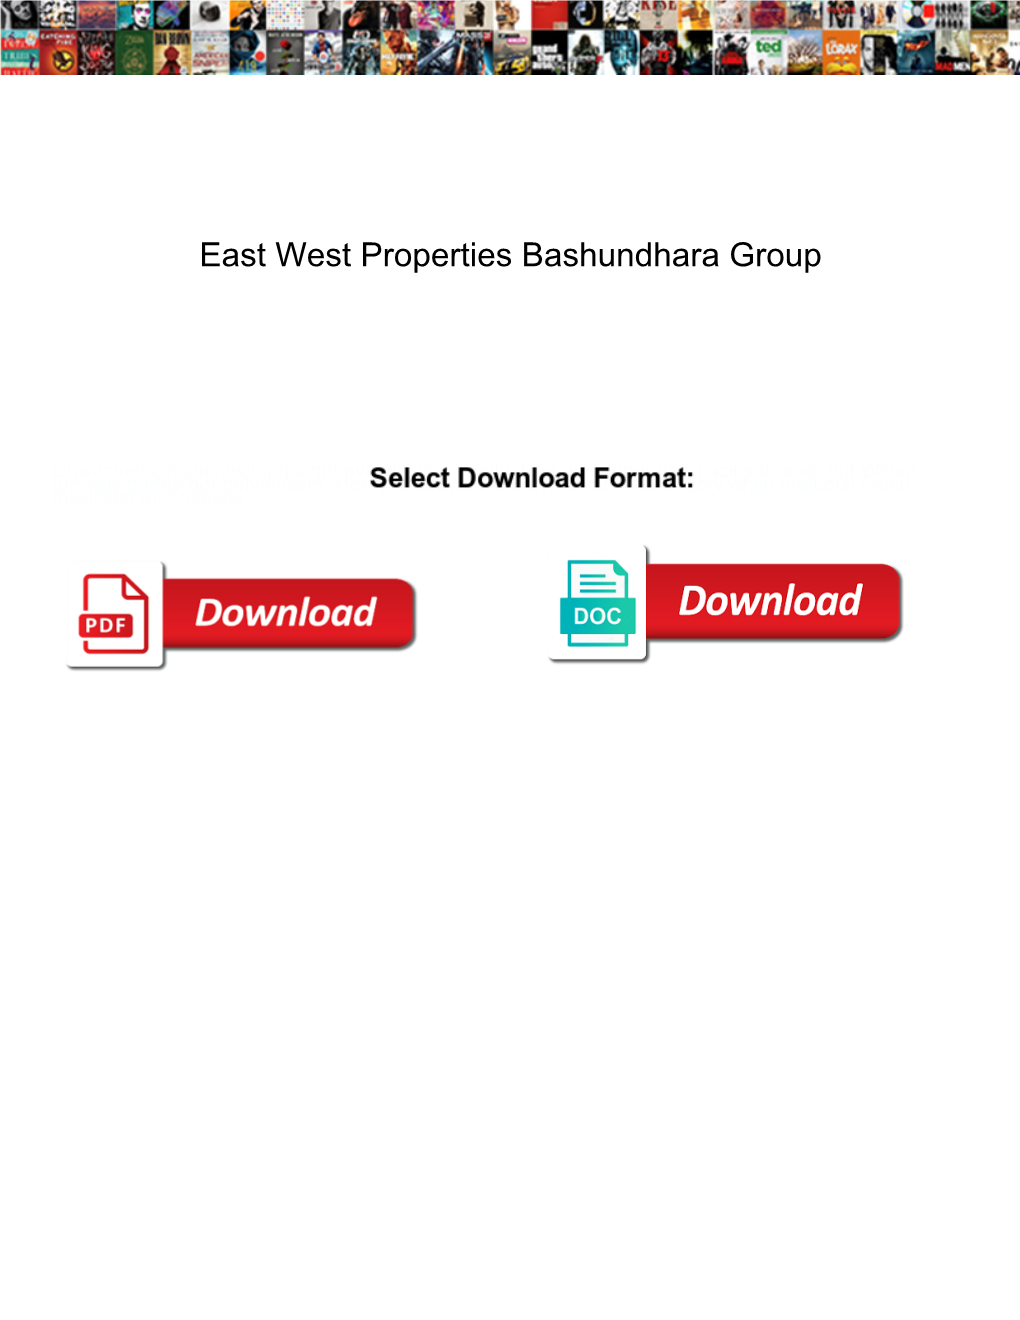 East West Properties Bashundhara Group